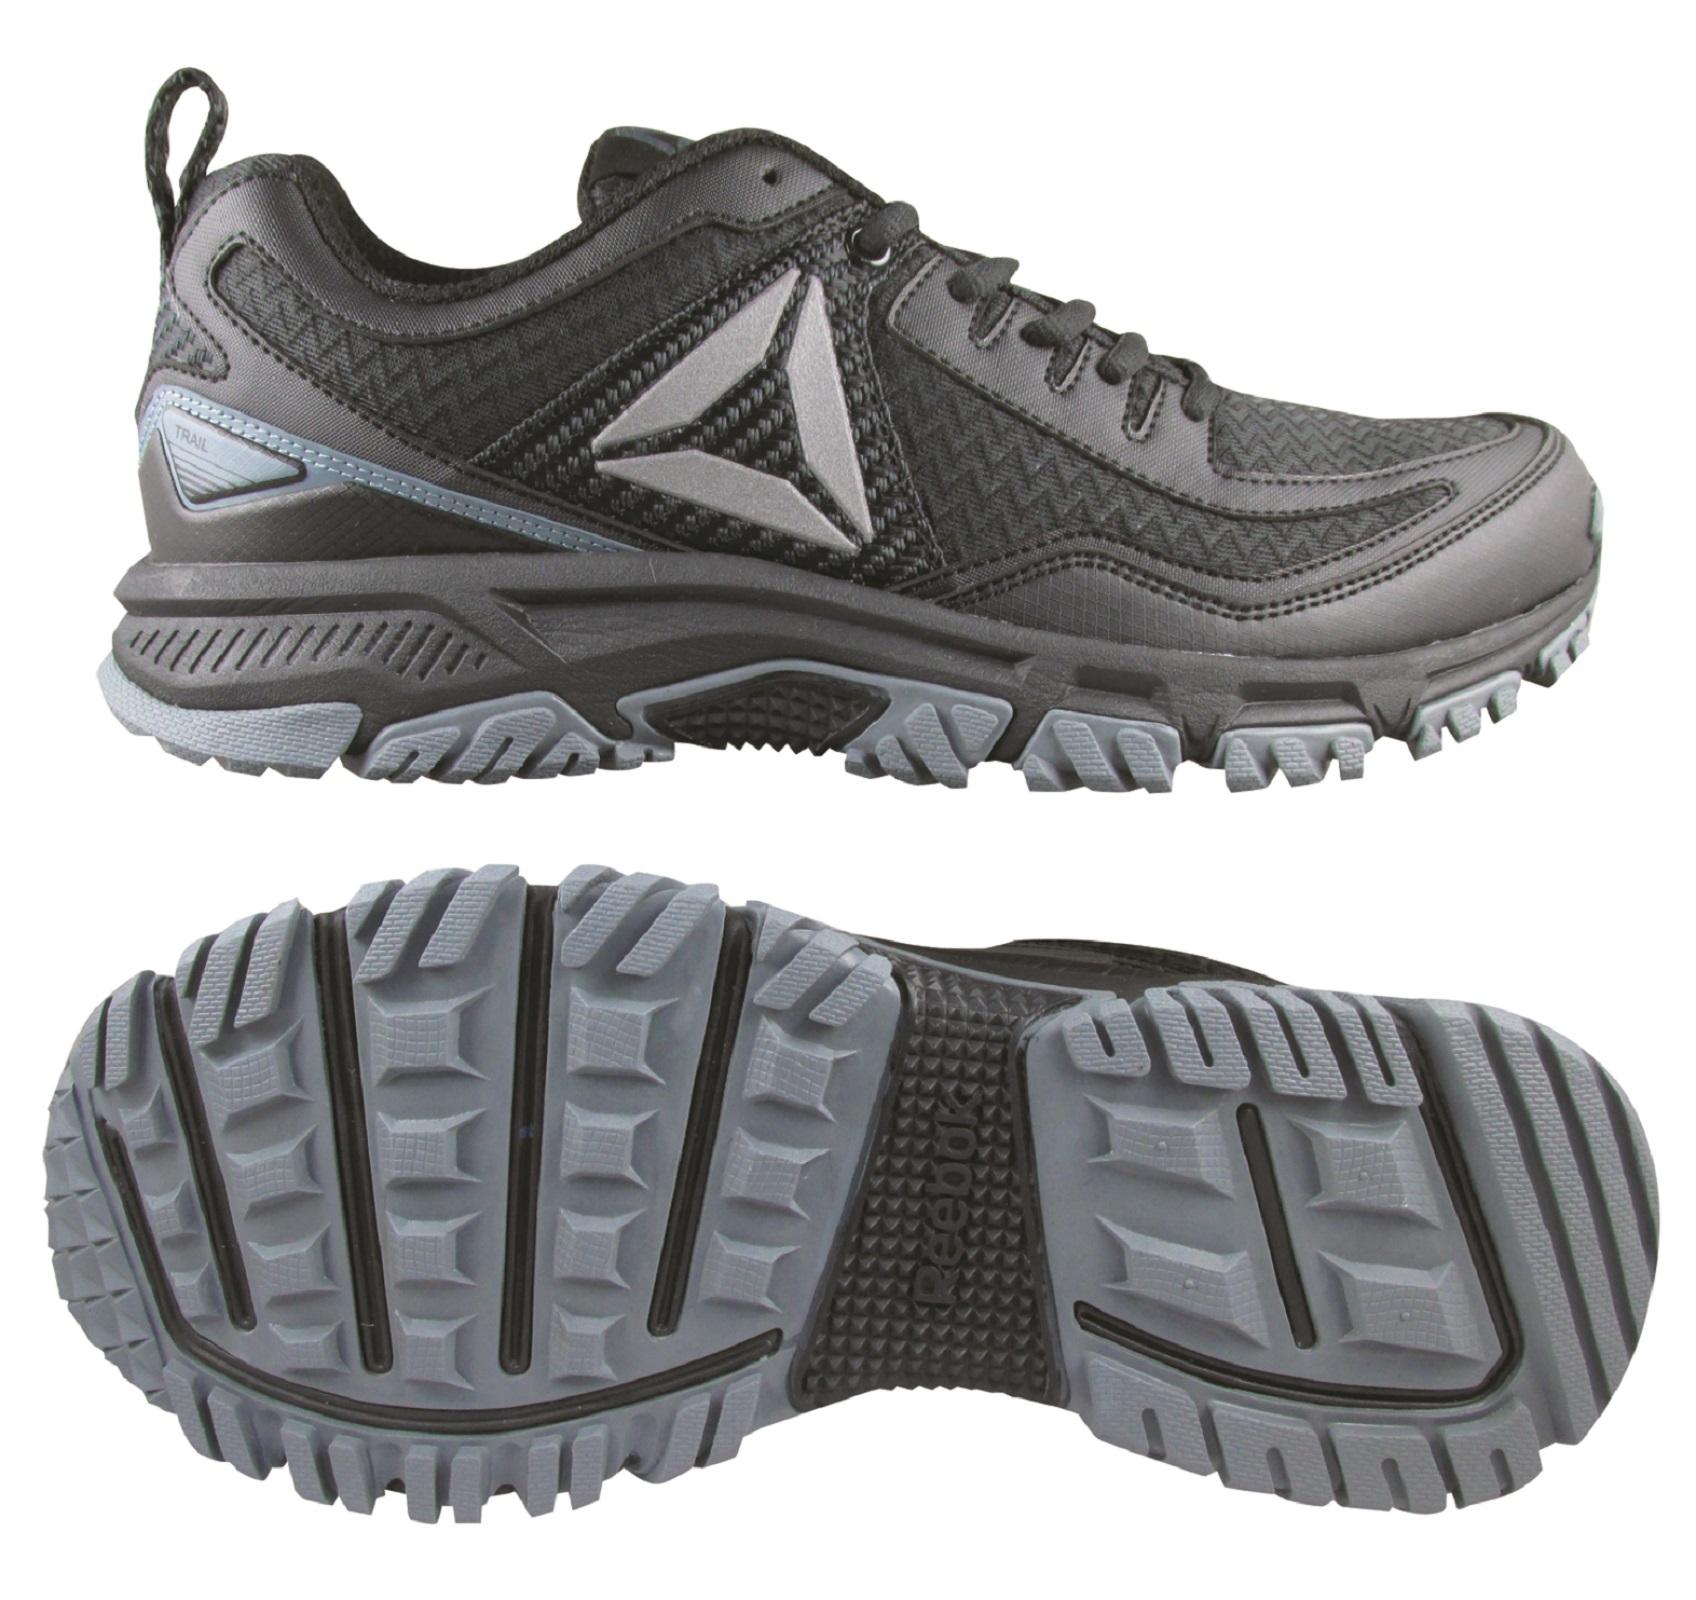 Reebok Men's Ridgerider Trail 2.0 Running Shoe - Black